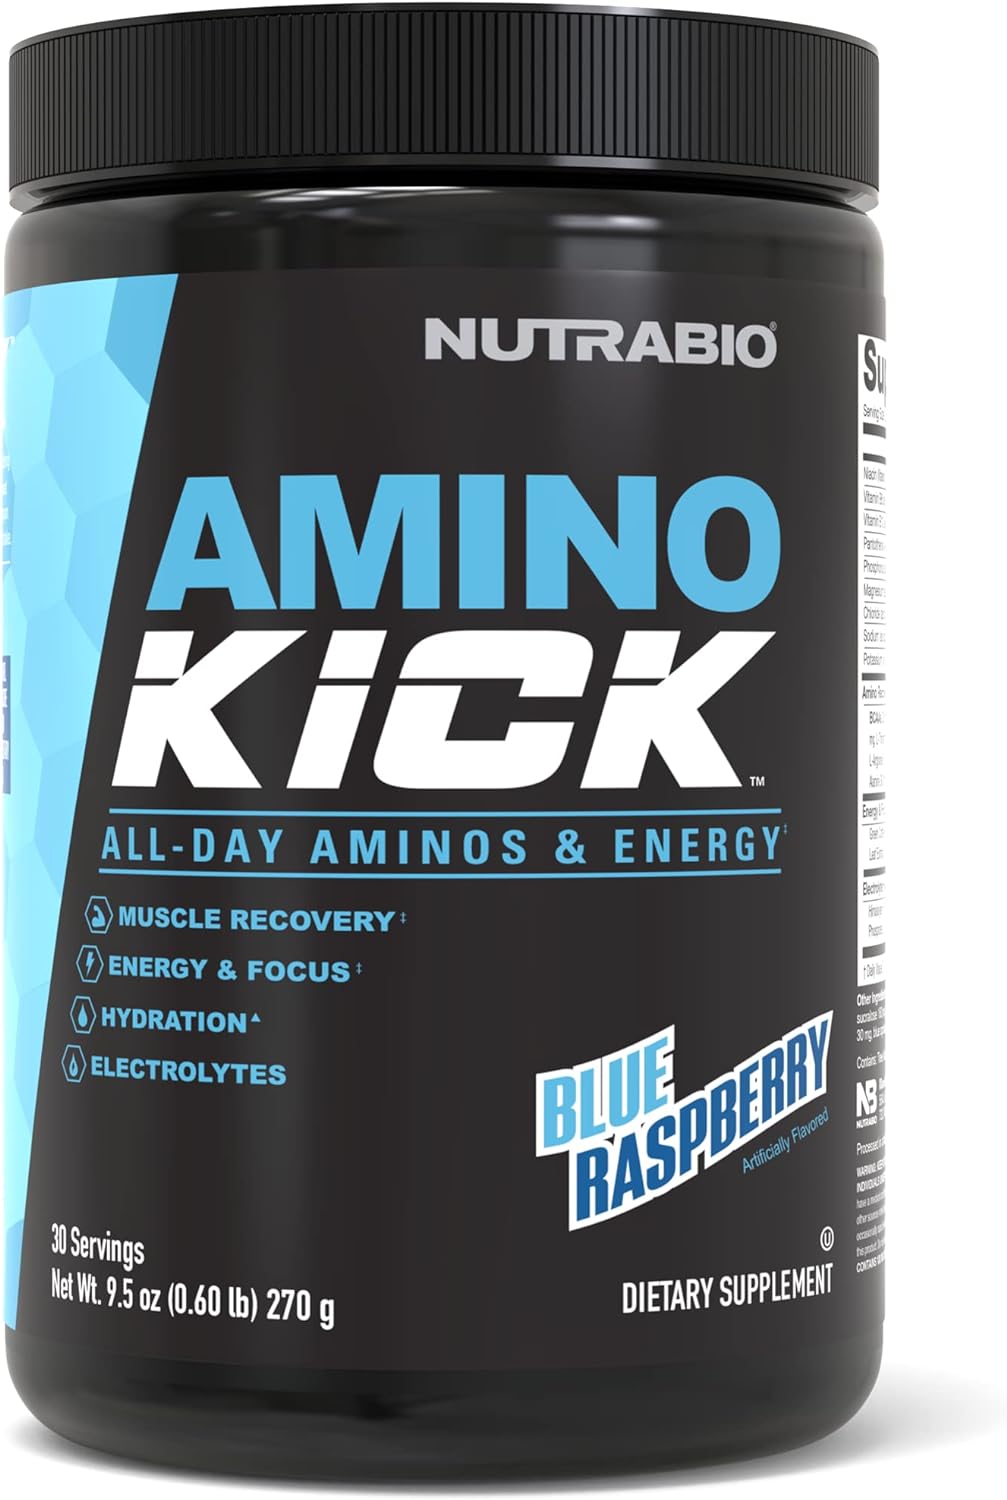 NutraBio Amino Kick - Amino Acid Energy Formula - BCAA's, Electrolytes for Hydration, Natural Caffeine 30 Servings (Blue Raspberry)